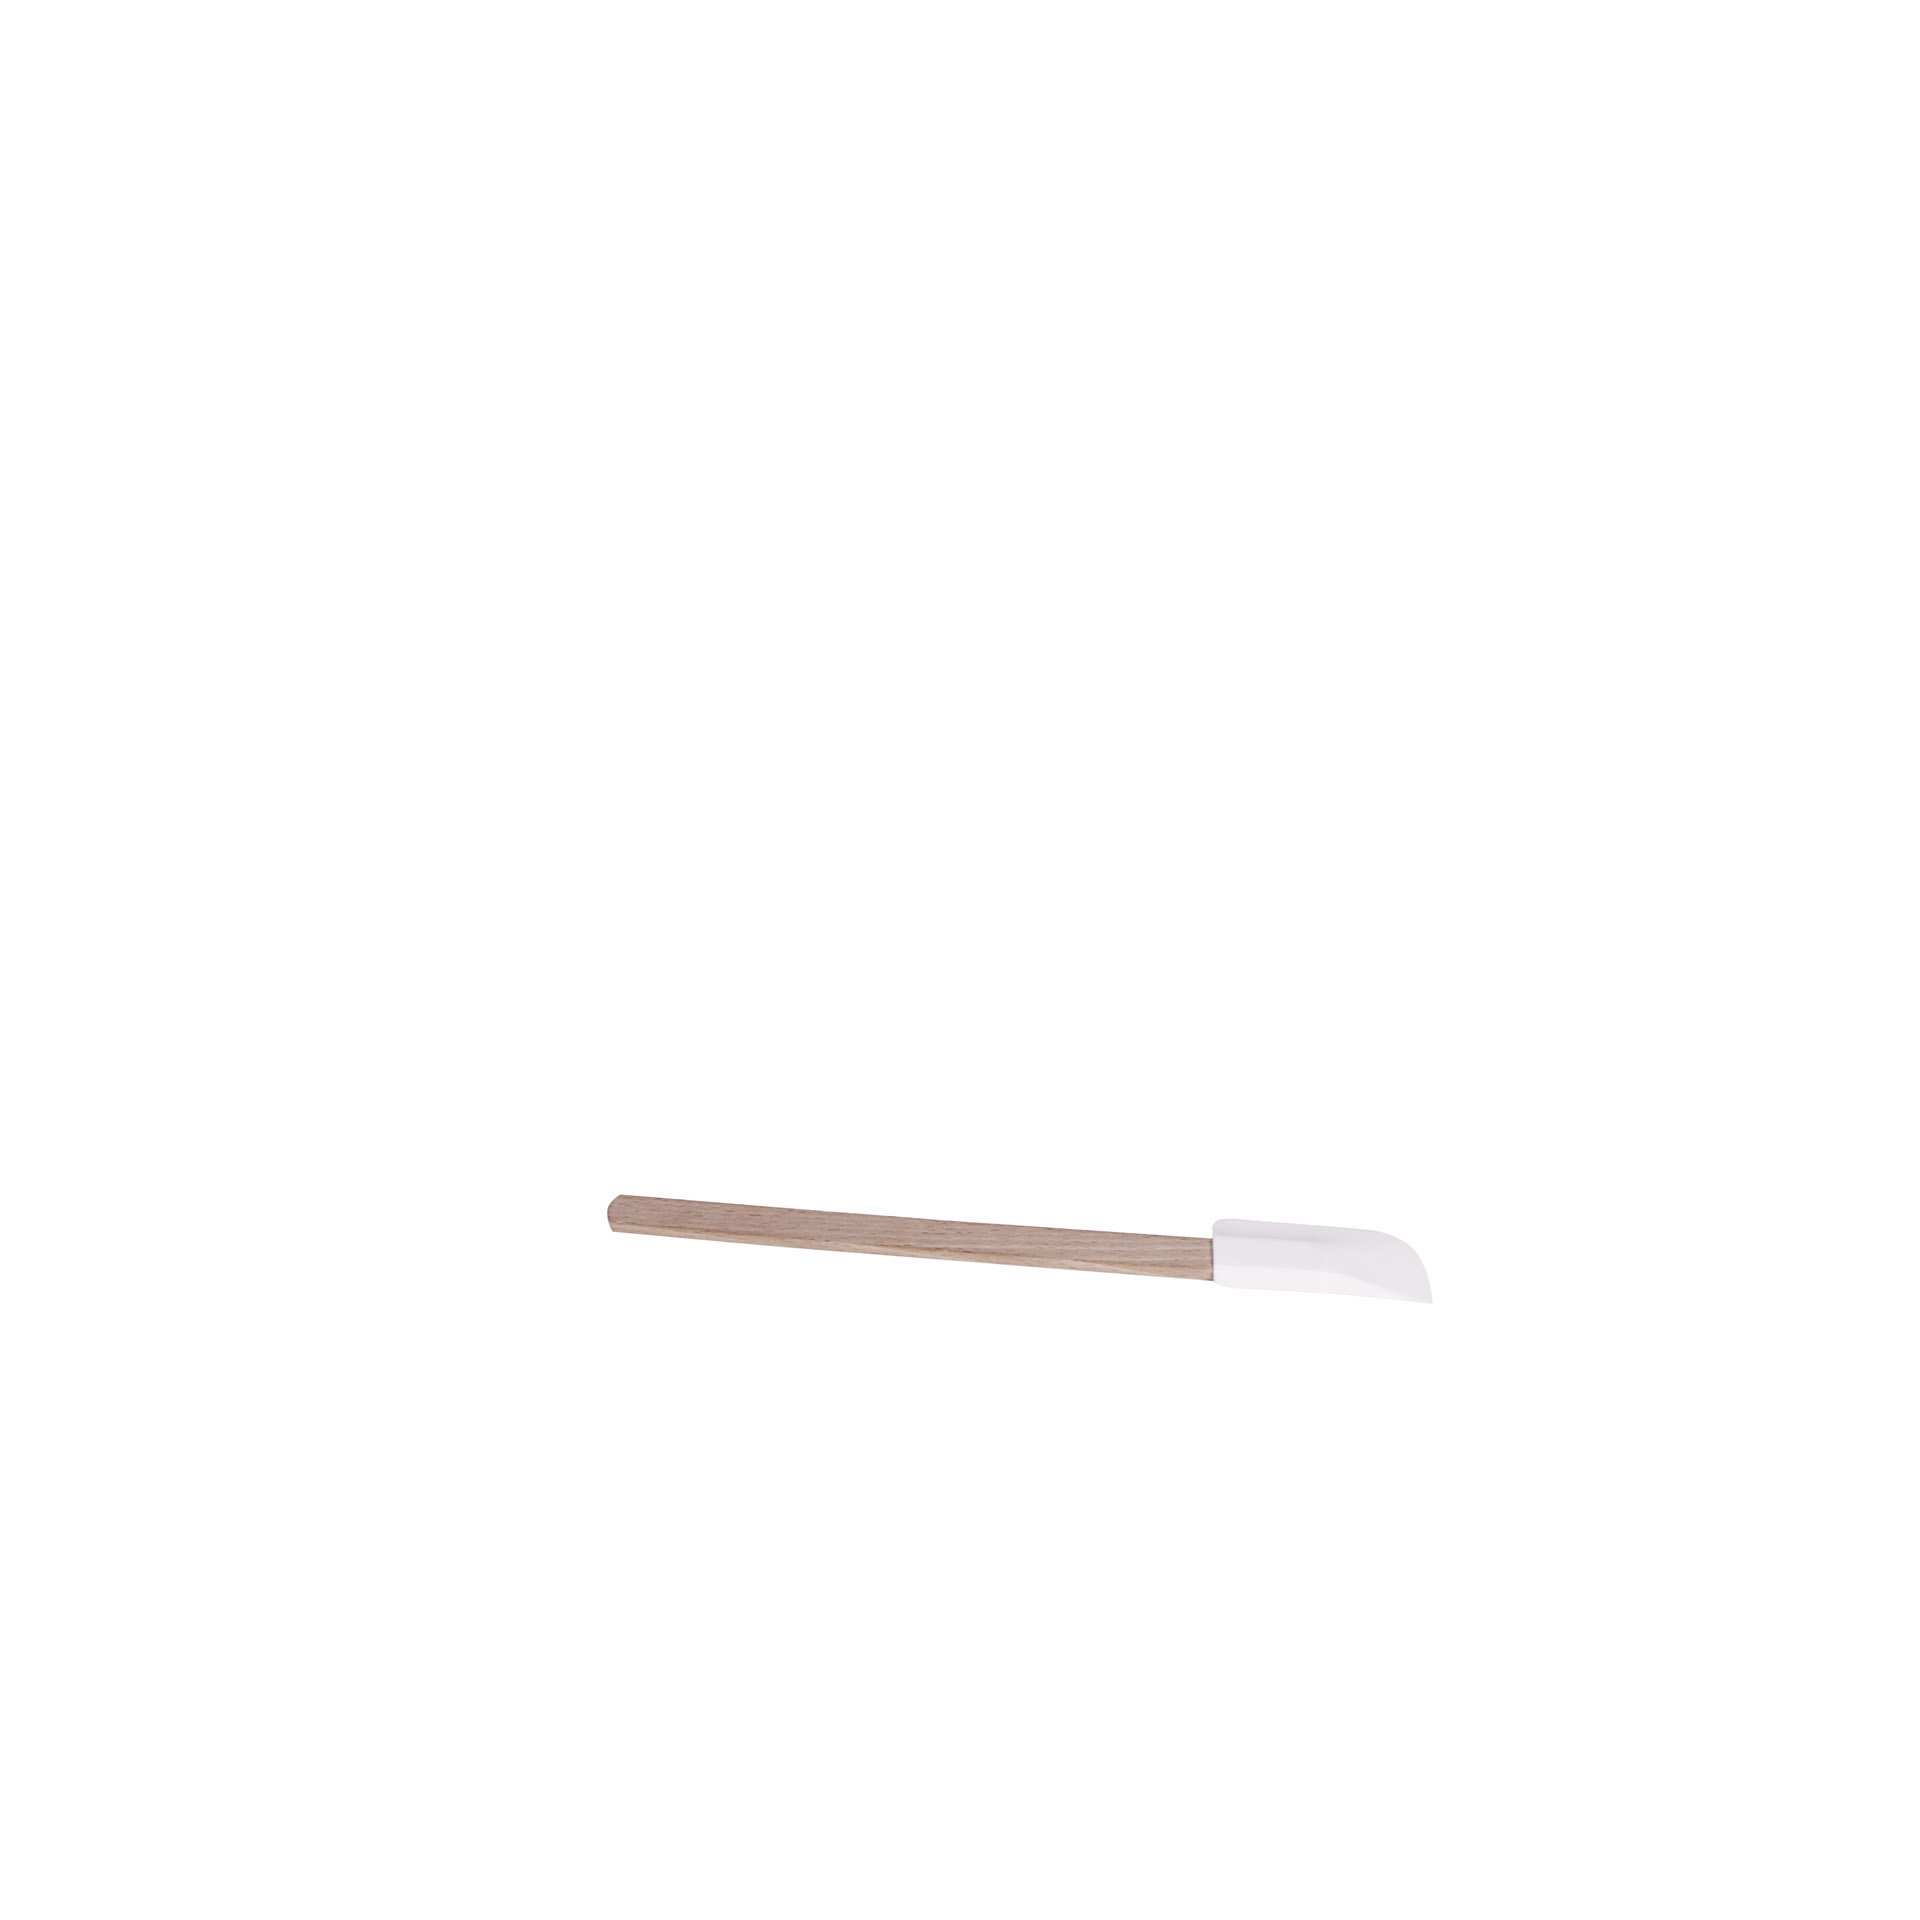 Stielschaber - mit Holzgriff - Abm. 27,0 x 2,8 x 0,5 cm - Gummi - 200770-C